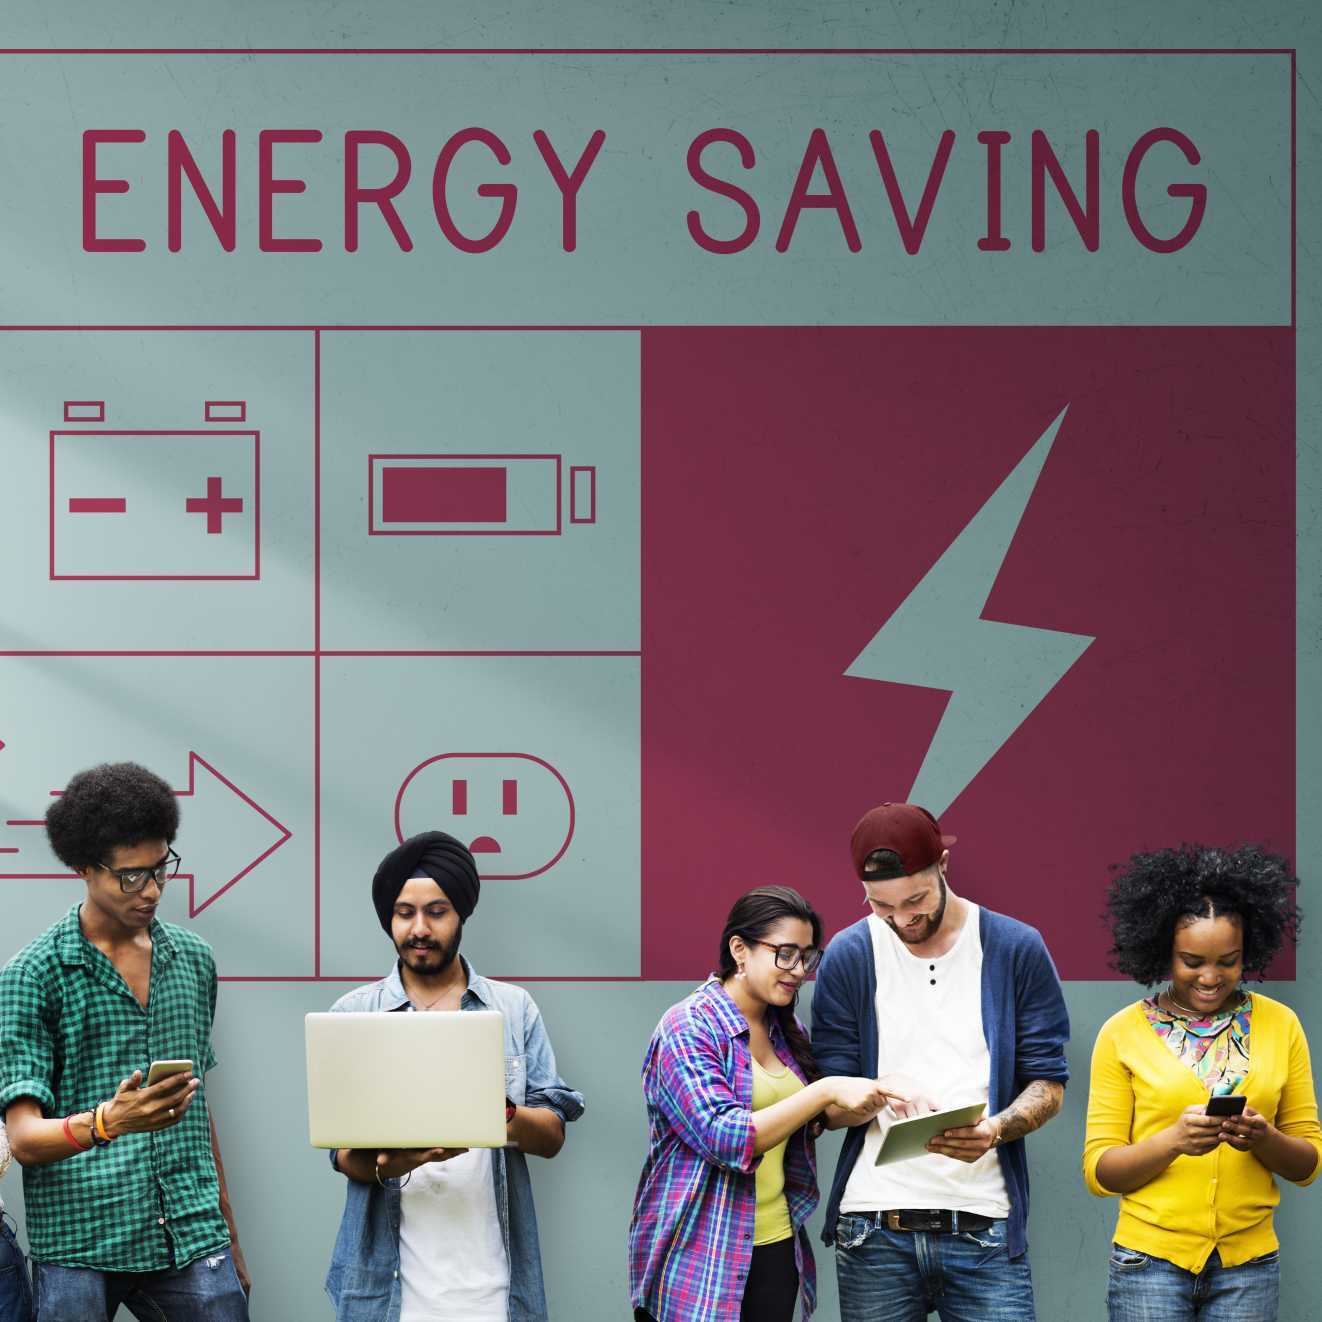 Gruppe junger Erwachsener vor dem Schriftzug "Energy Saving"